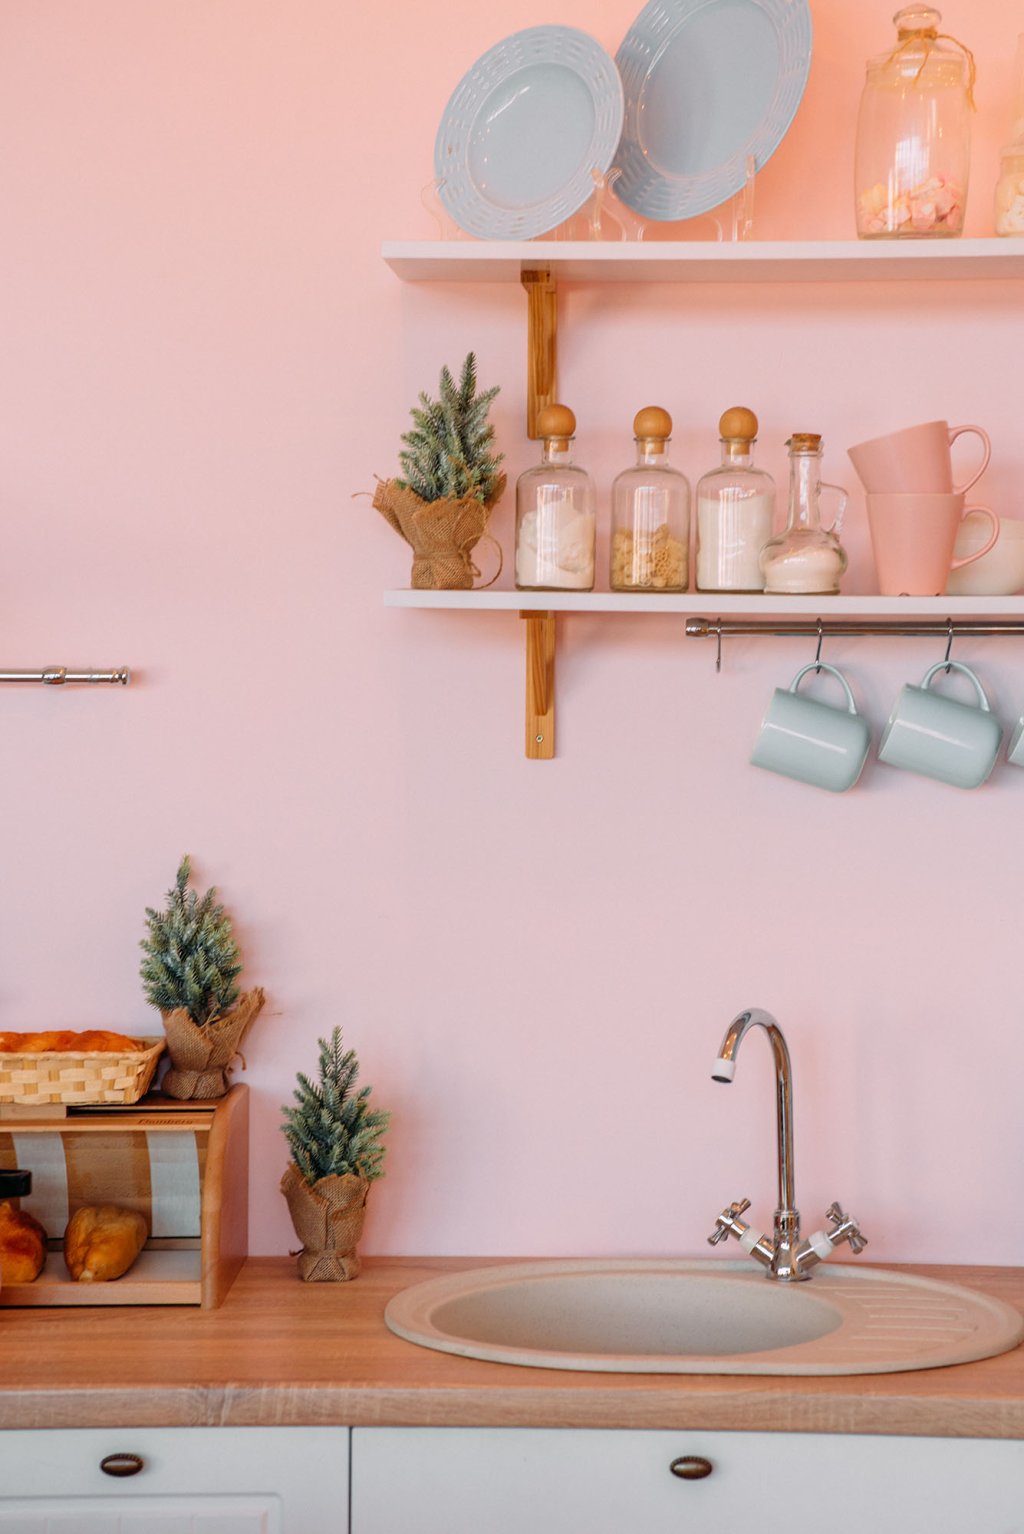 Pastel pink kitchen. Sink and shelves.